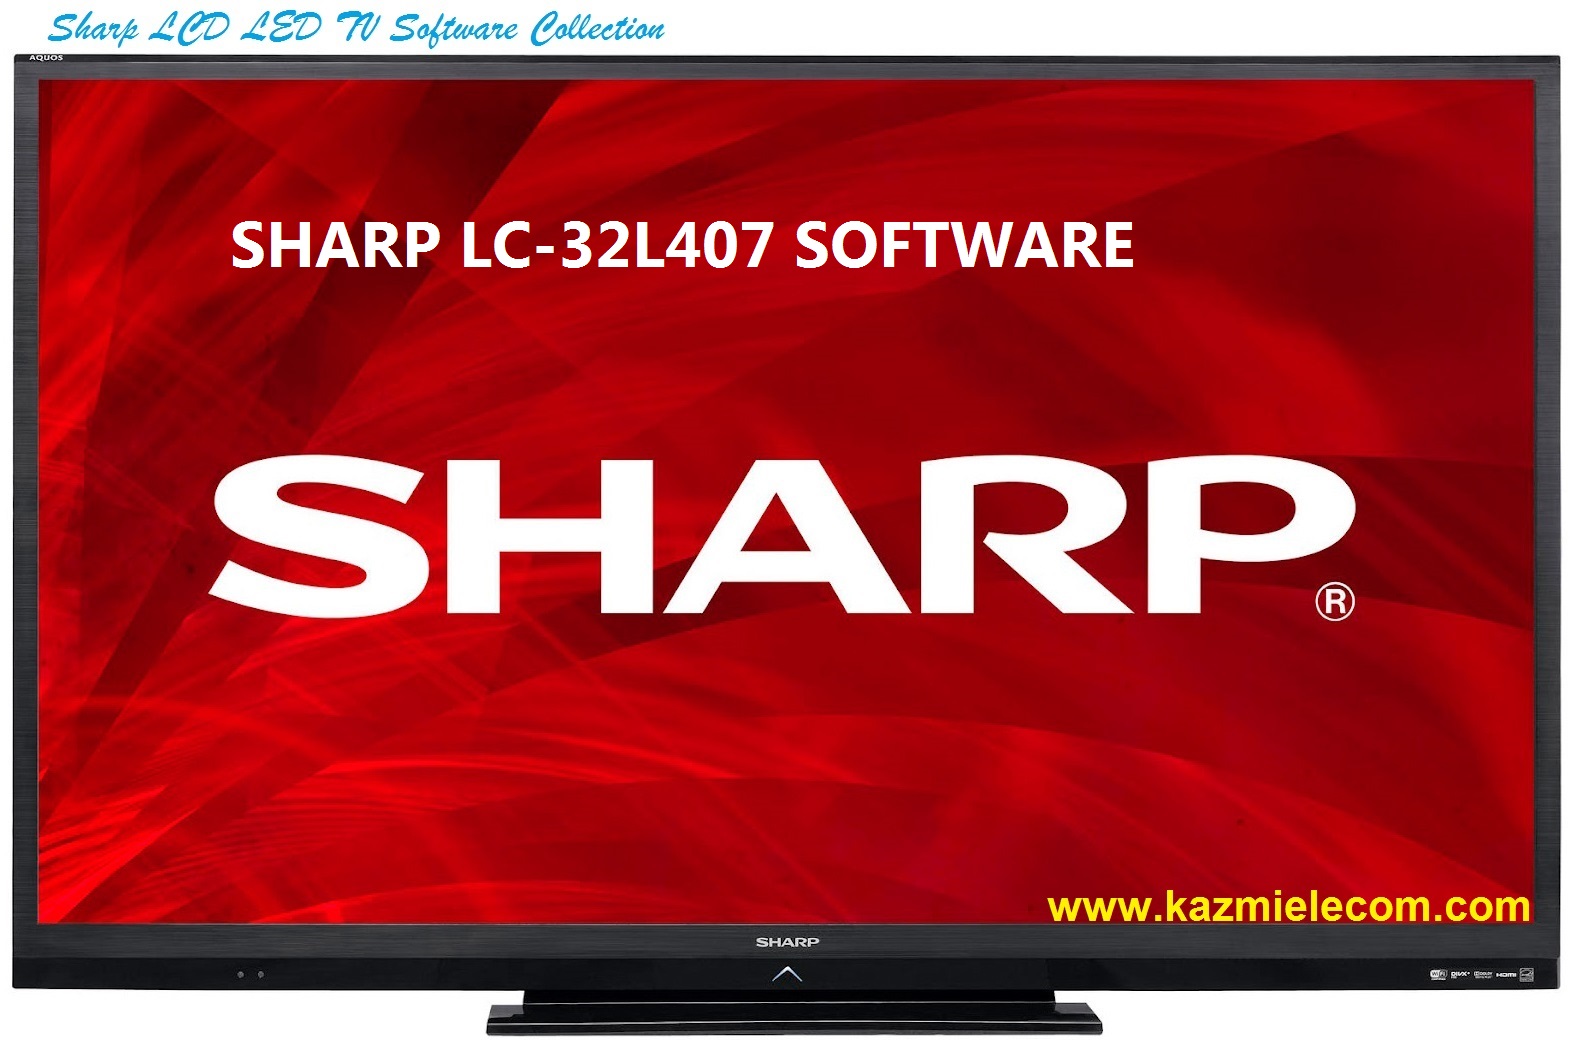 Sharp Lc-32L407